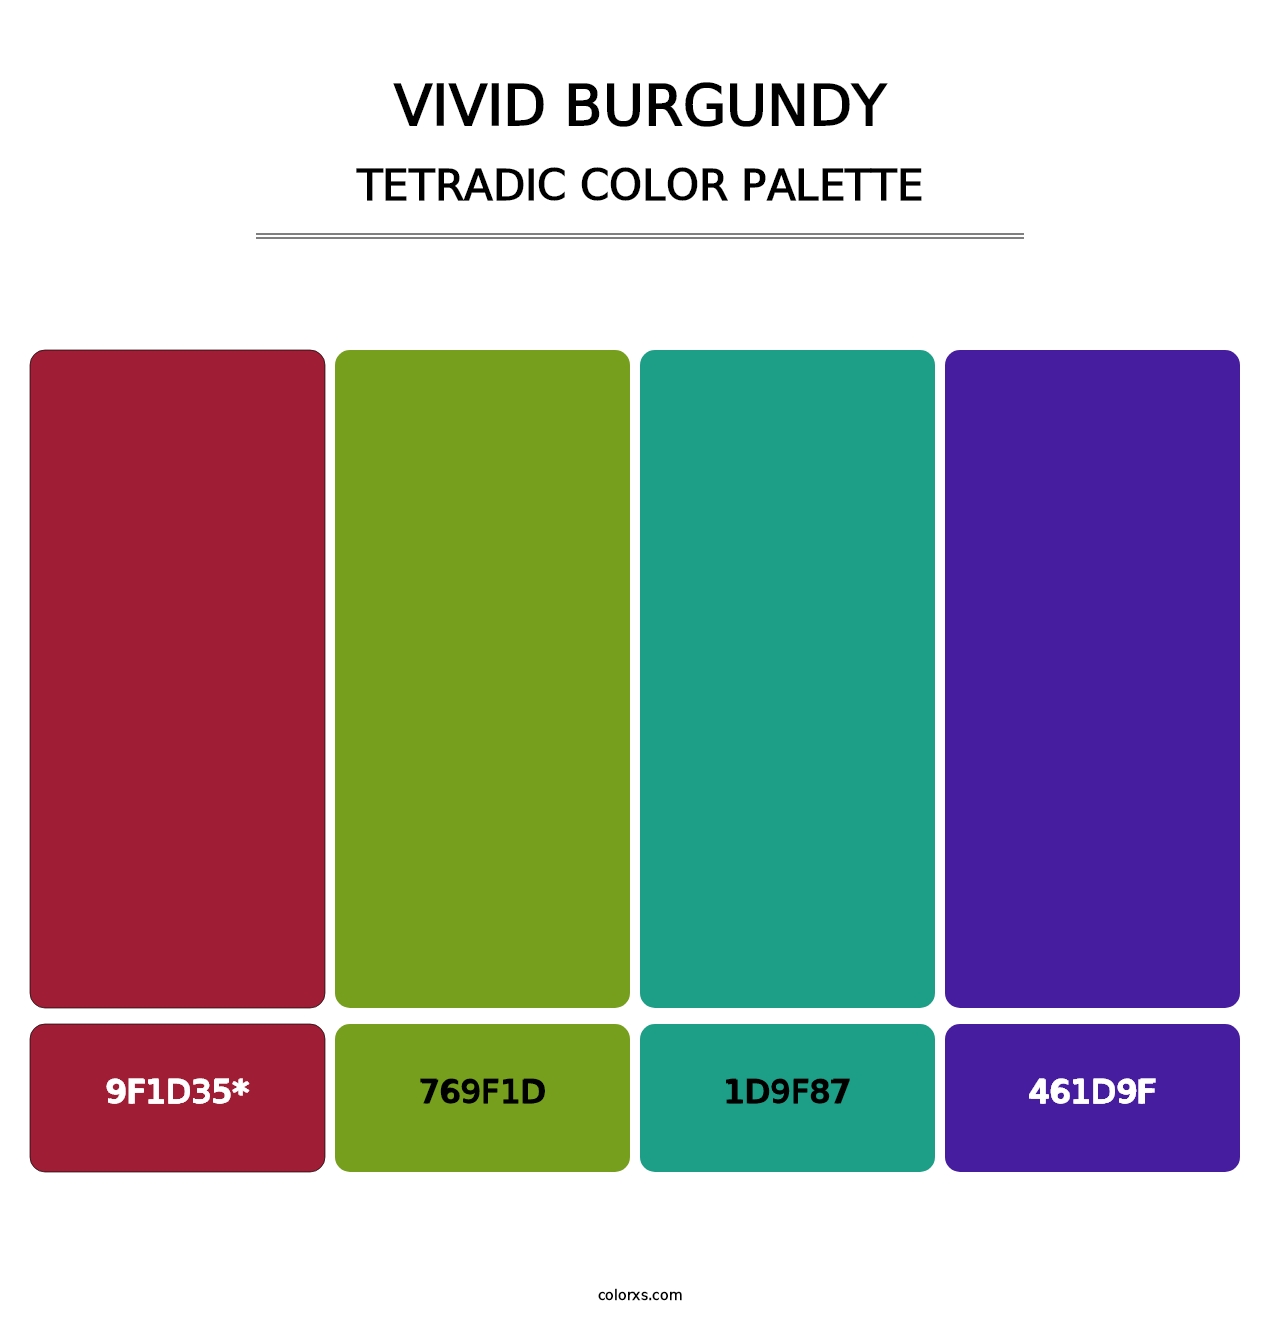 Vivid Burgundy - Tetradic Color Palette